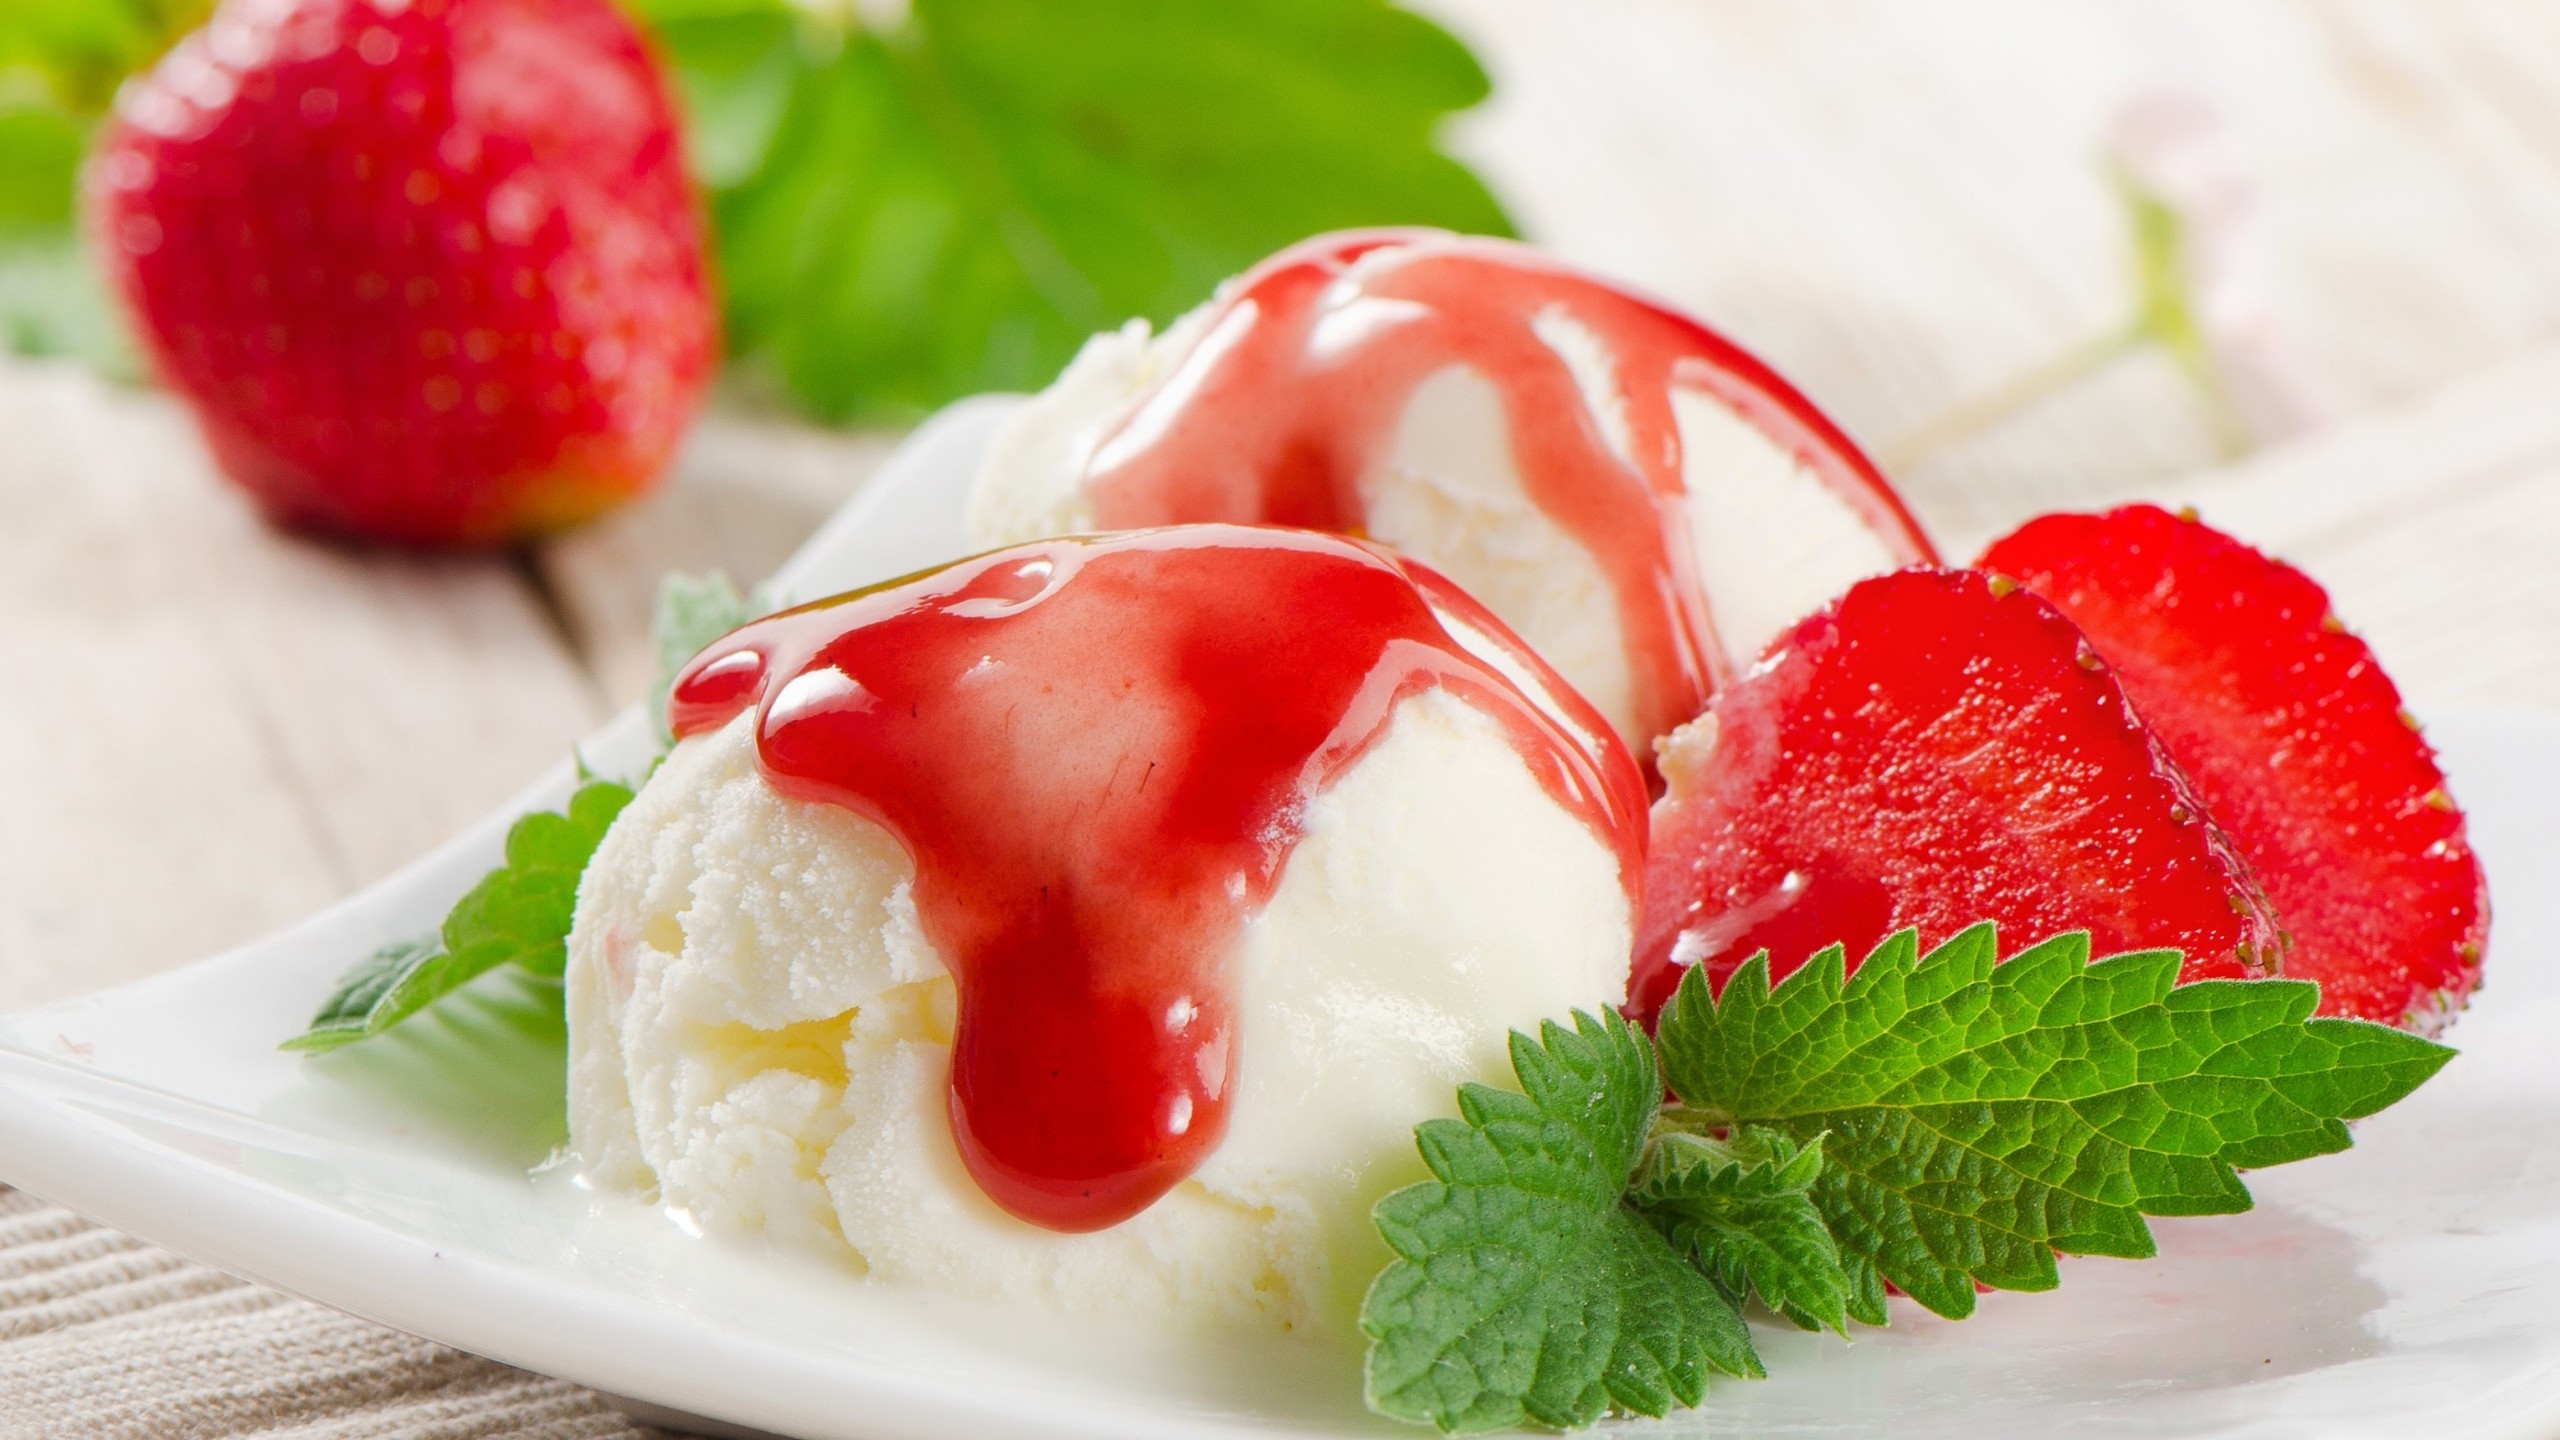 Strawberry Ice Cream for 2560x1440 HDTV resolution